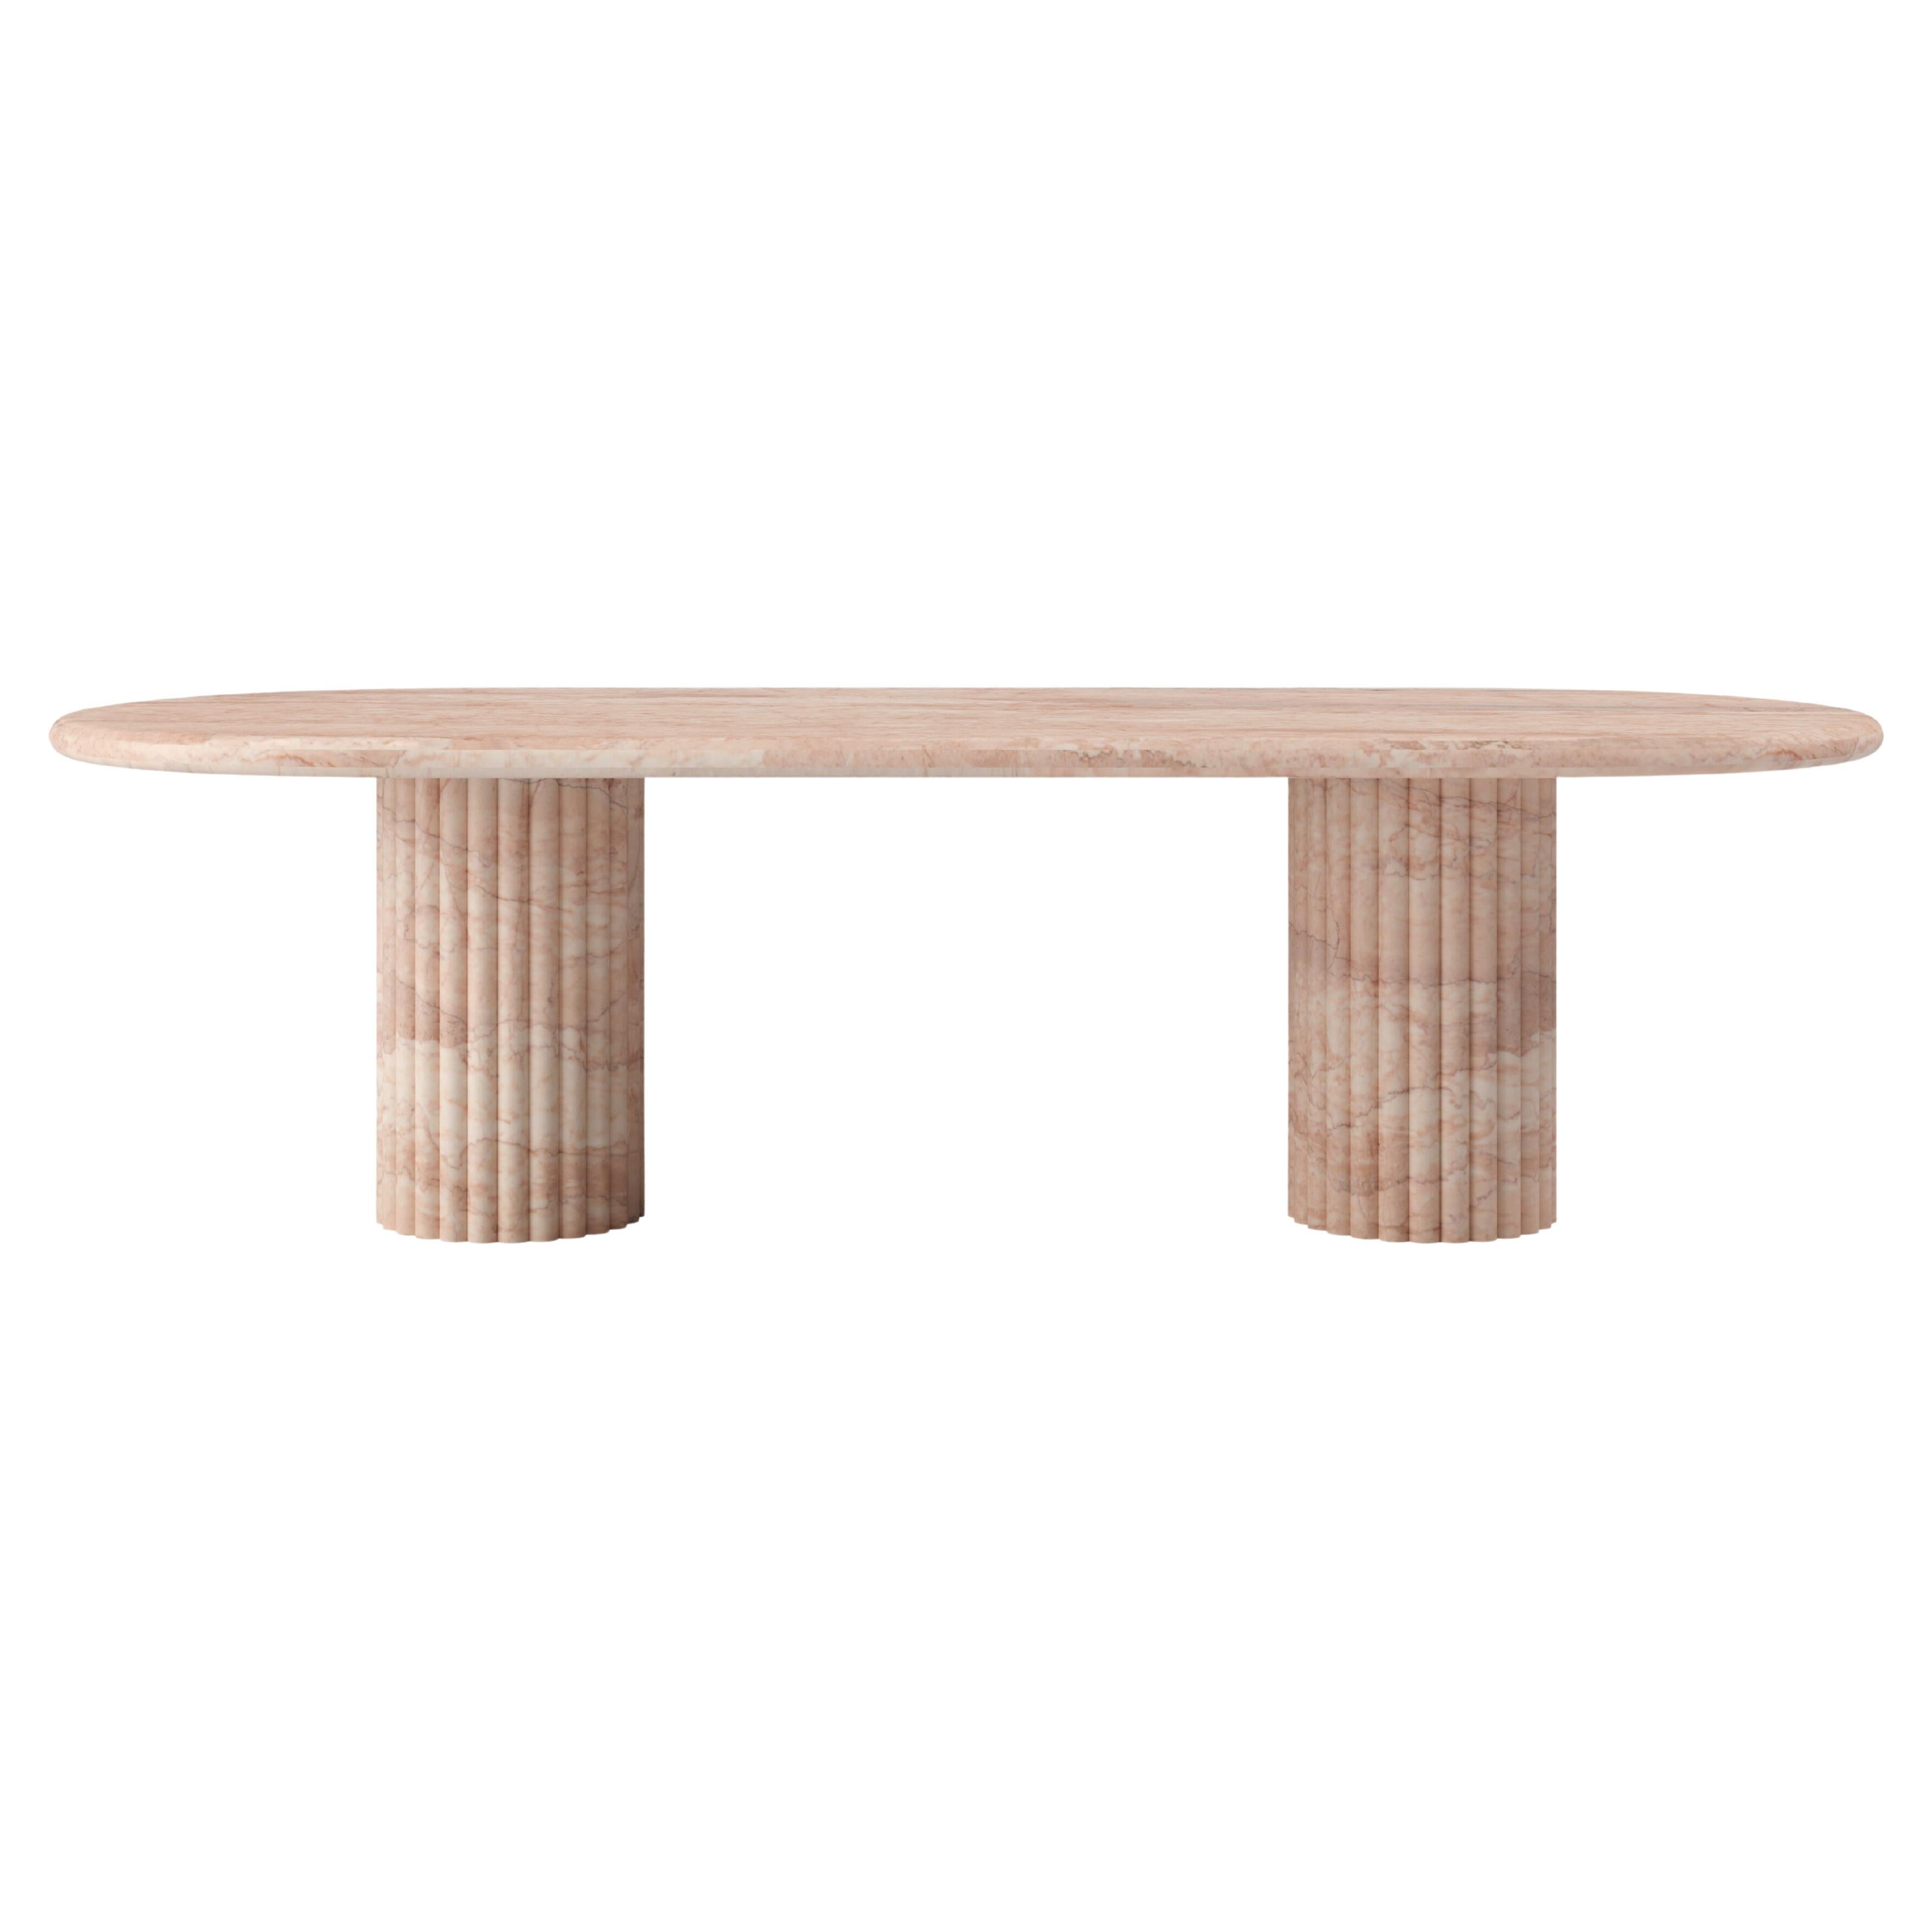 FORM(LA) Fluta Oval Dining Table 84”L x 42”W x 30”H Rosa Crema Marble